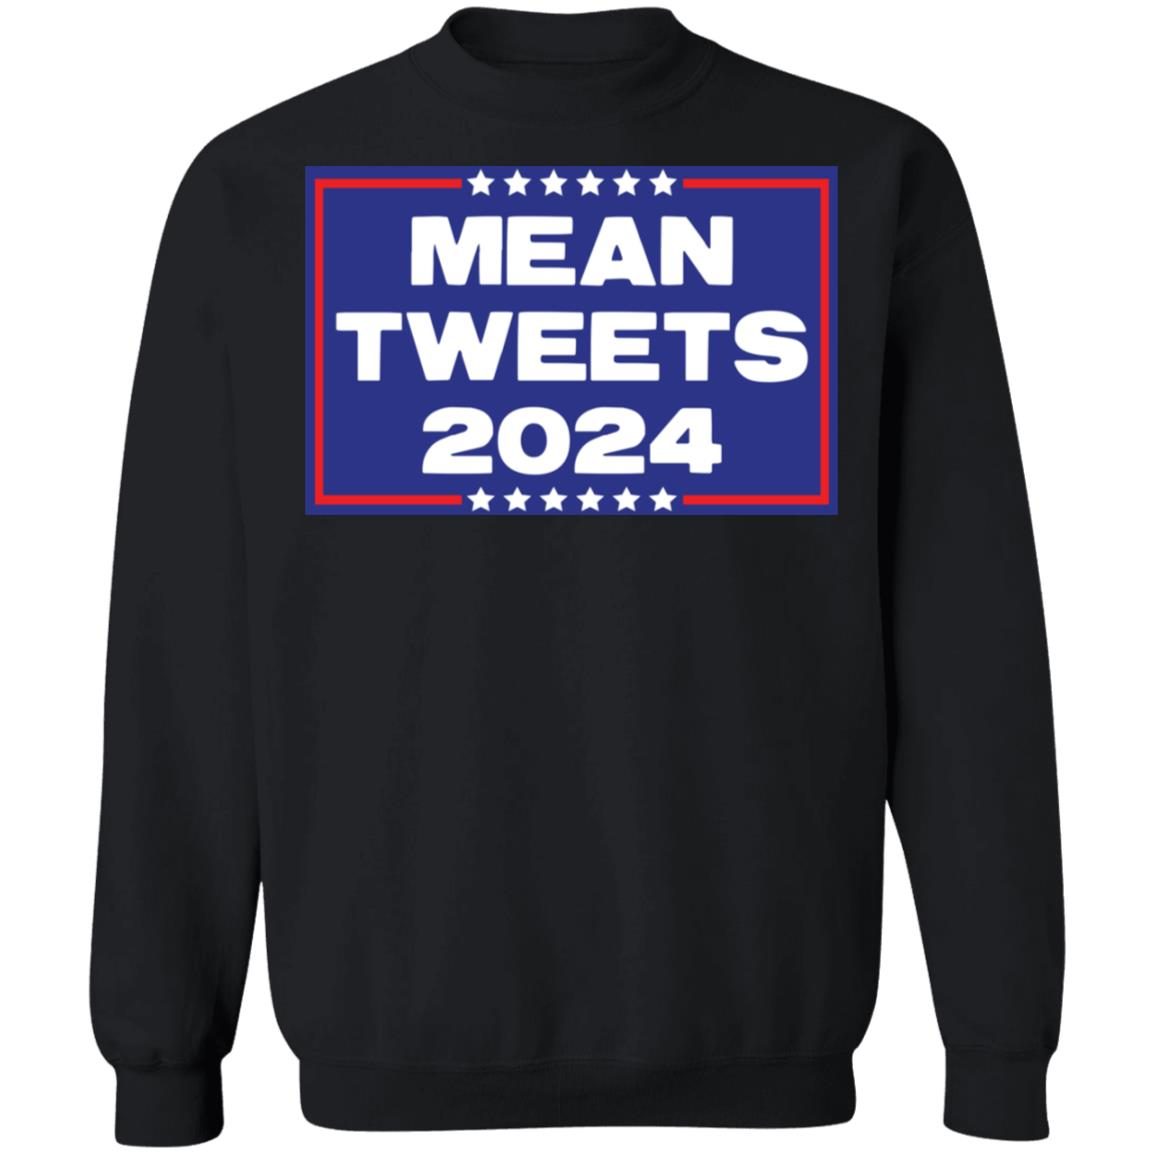 Mean tweets 2024 shirt